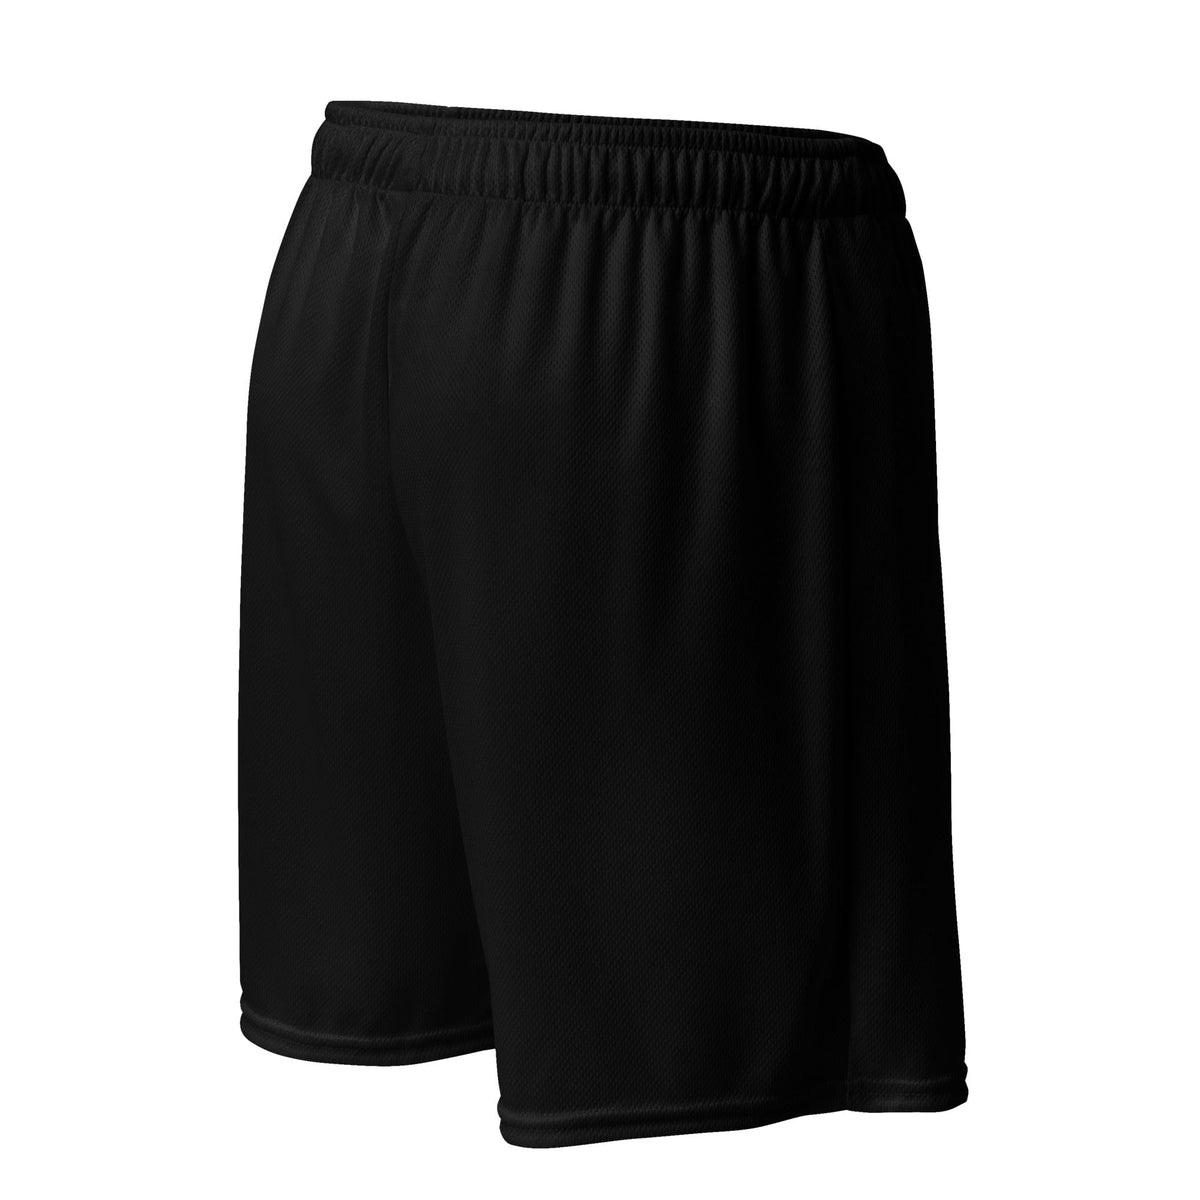 p.4.13 black basketball shorts back right